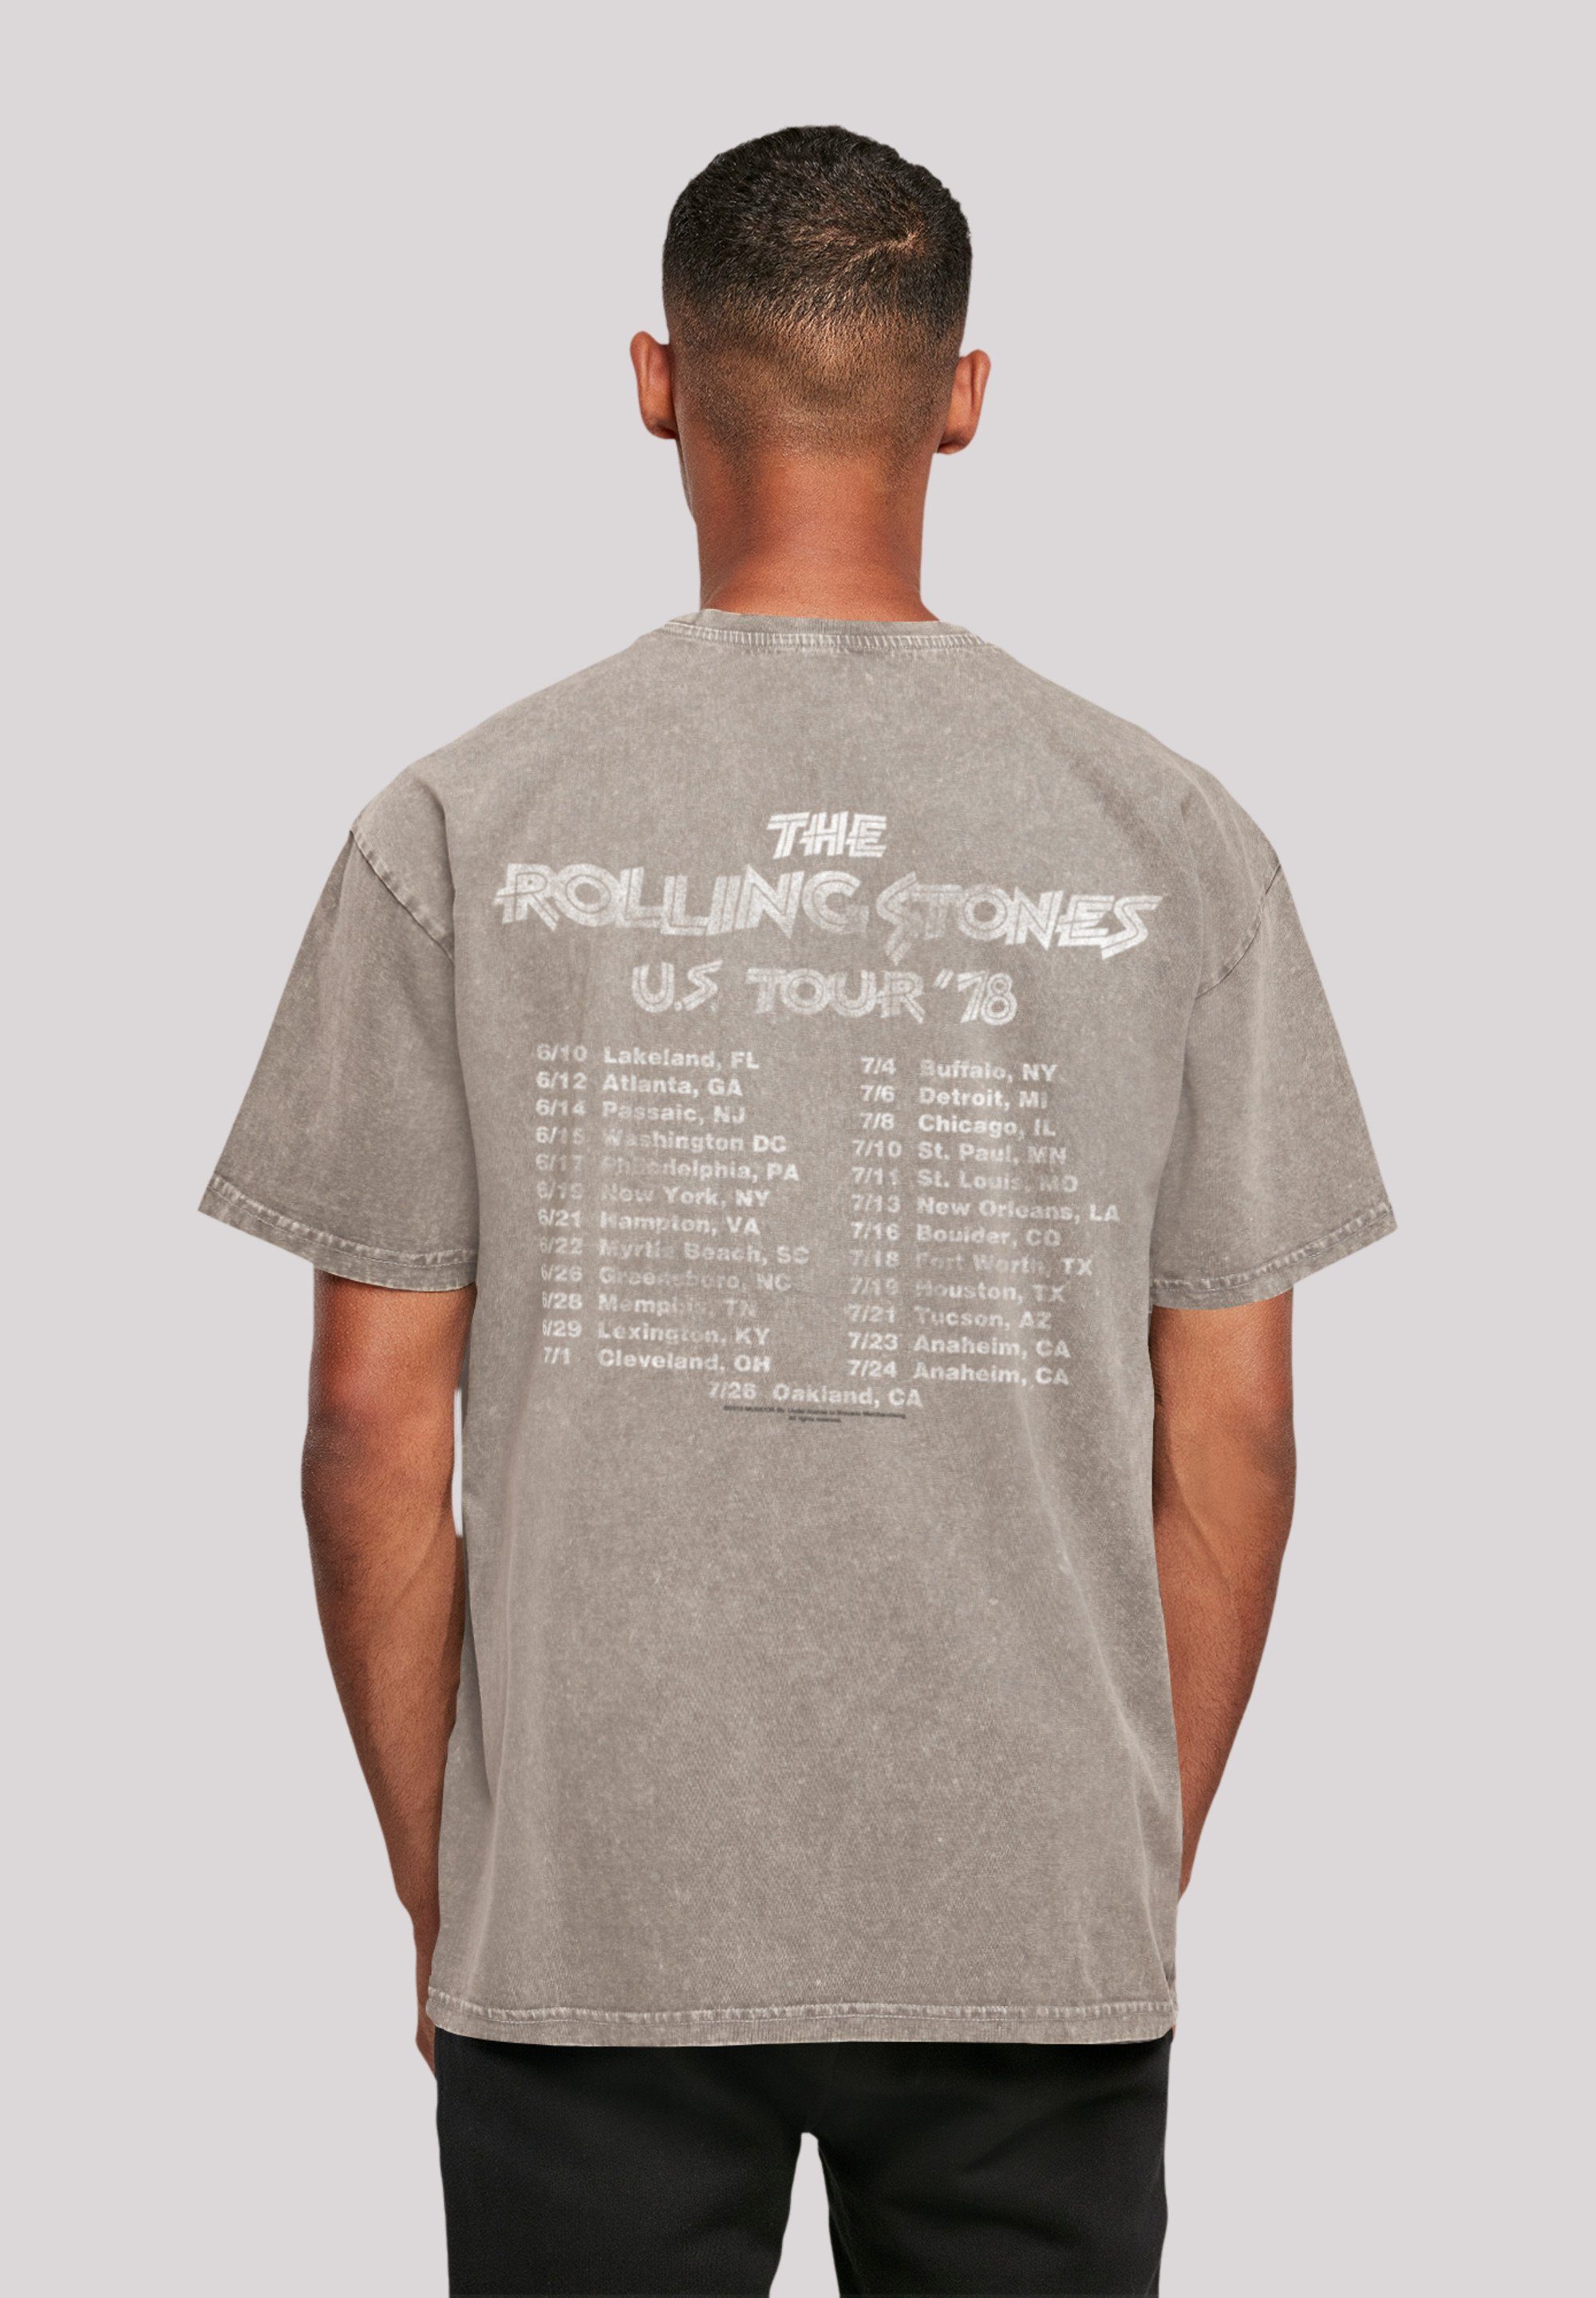 F4NT4STIC T-Shirt The Rolling US Print '78 Stones Asphalt Tour